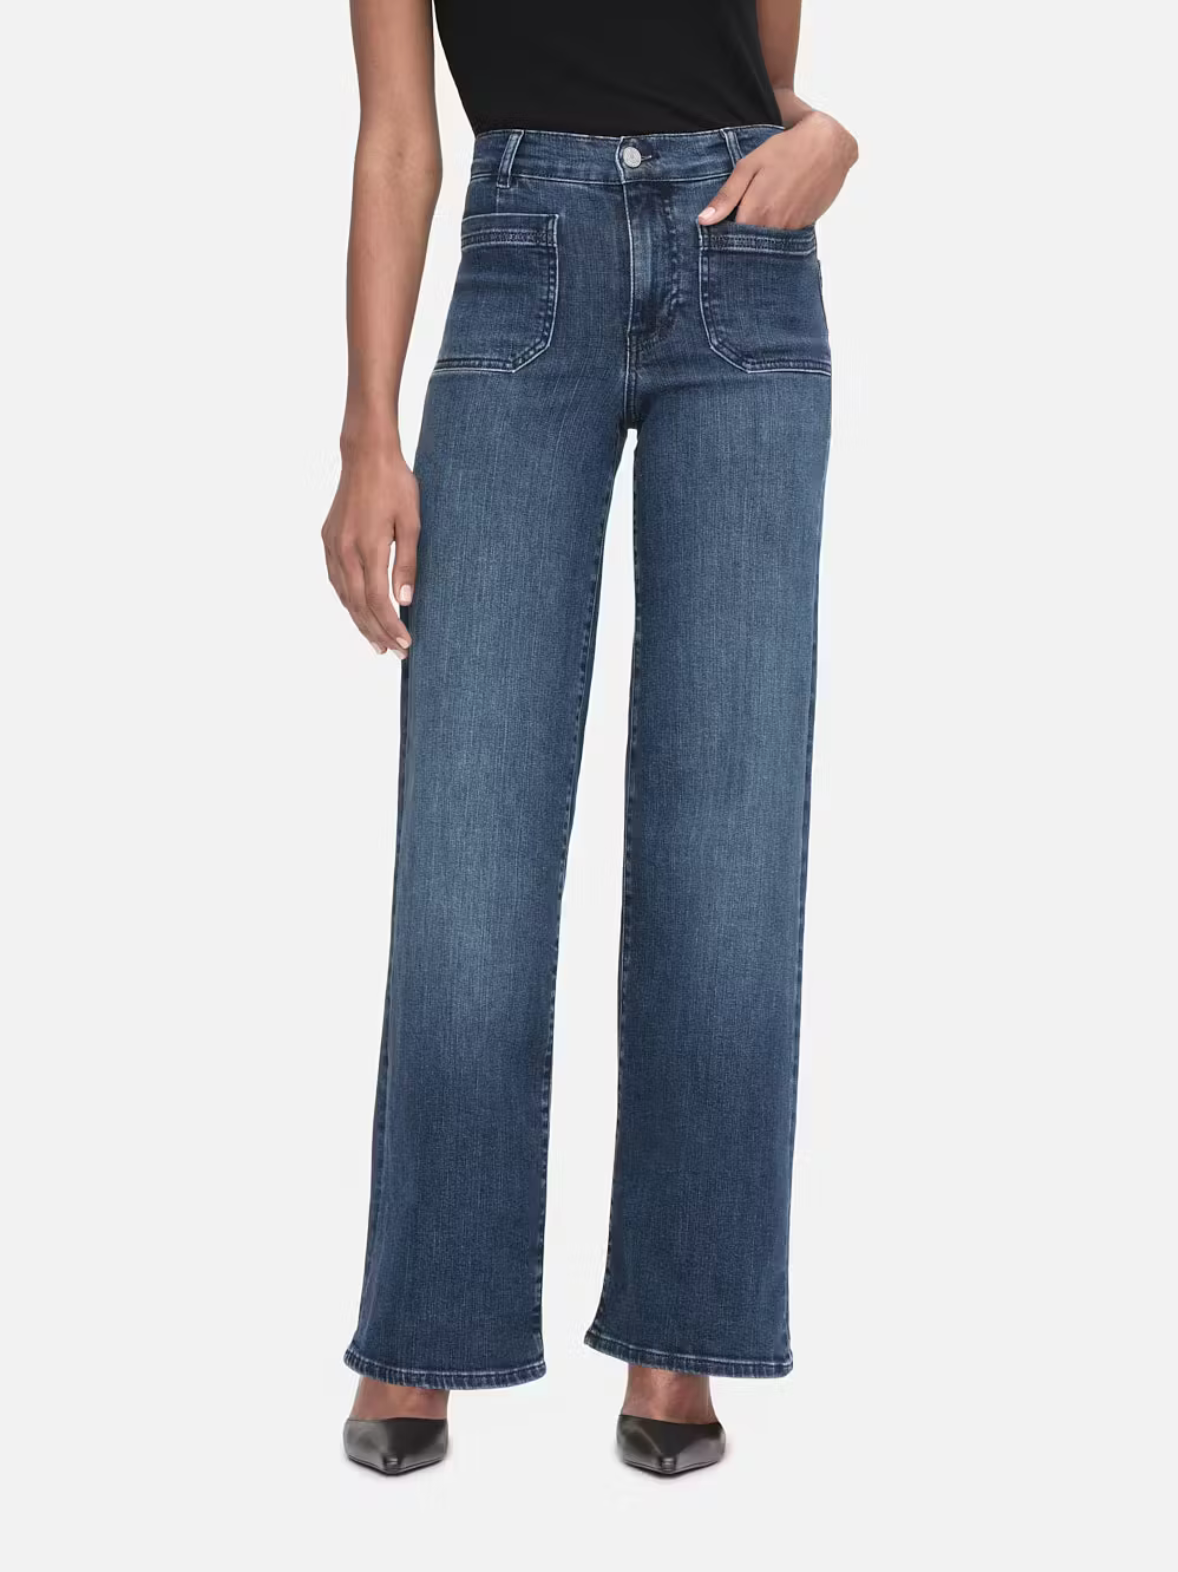 Model wears wide leg jeans in a dark wash. Features front pockets.